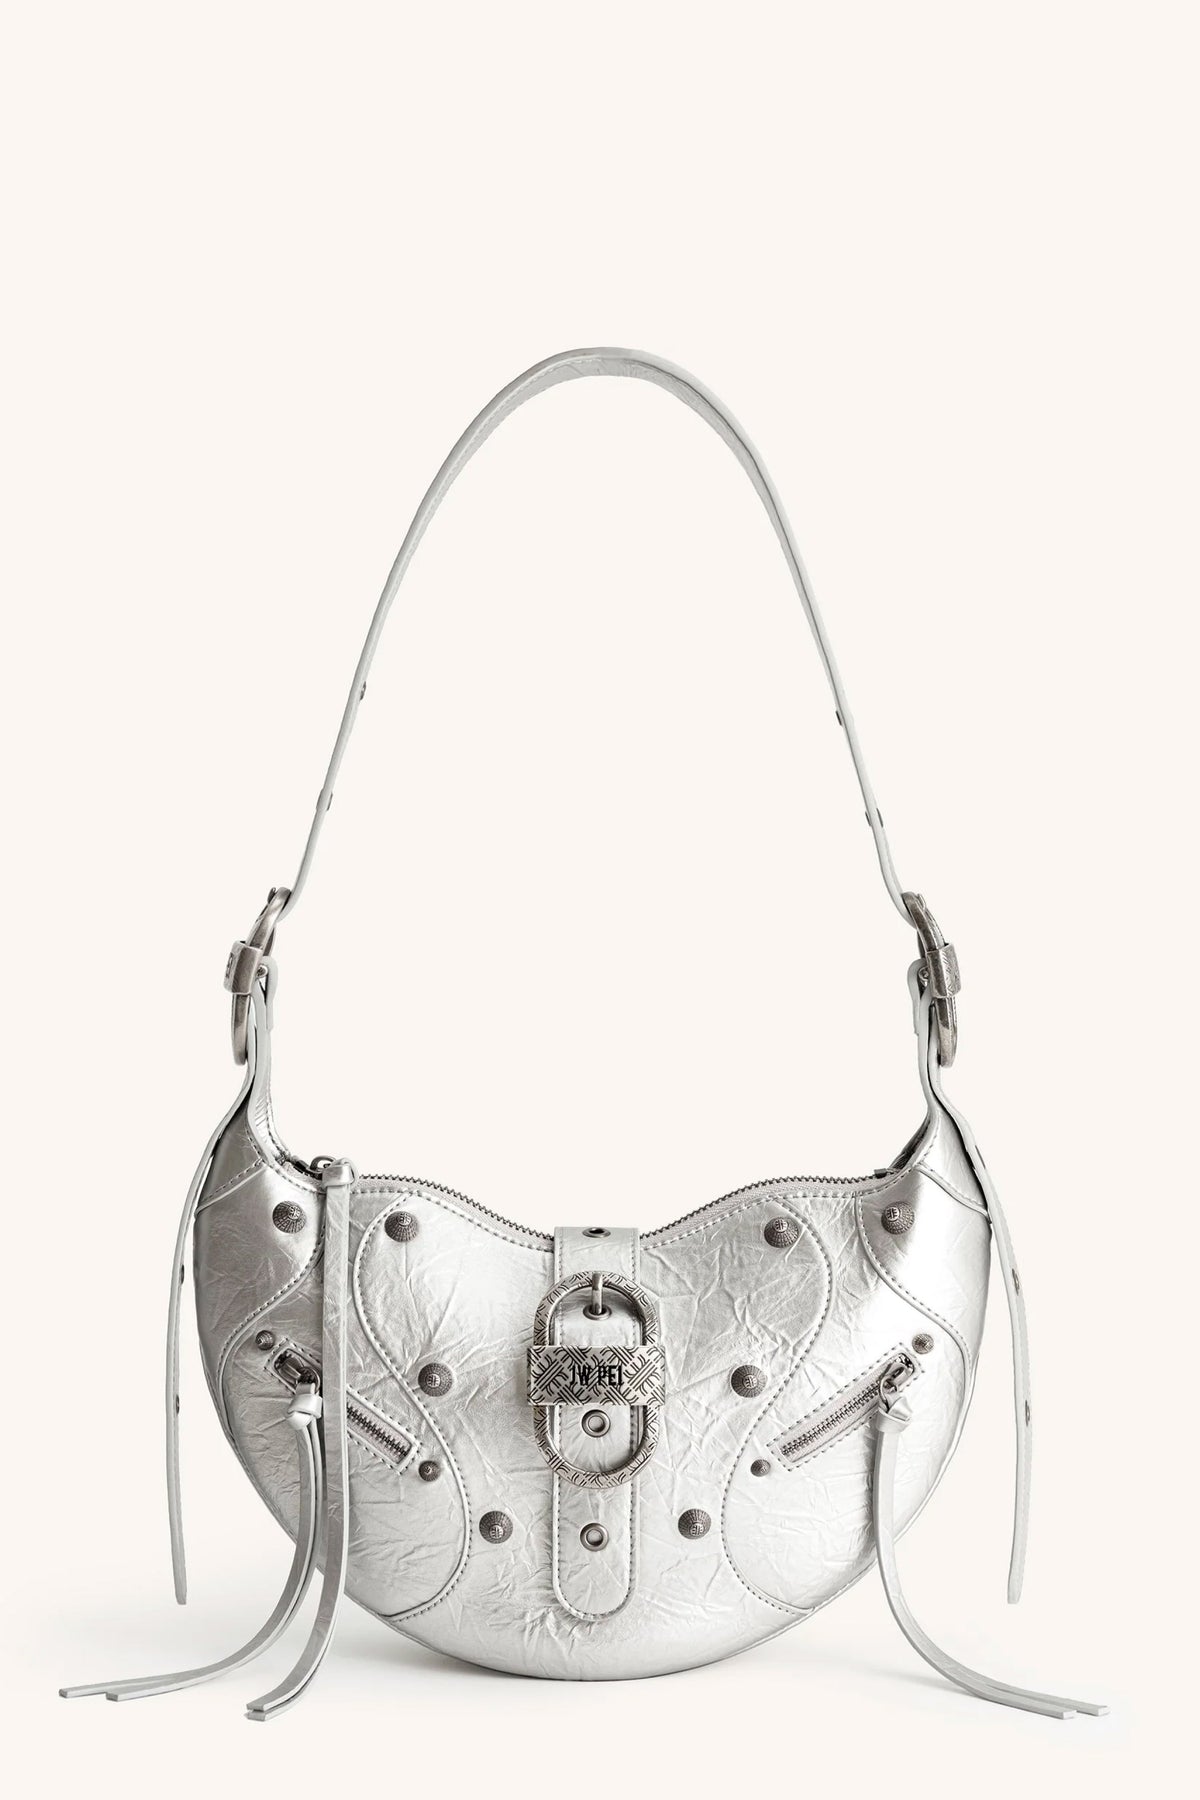 JW PEI Tessa Metallic Pleating Shoulder Bag Silver